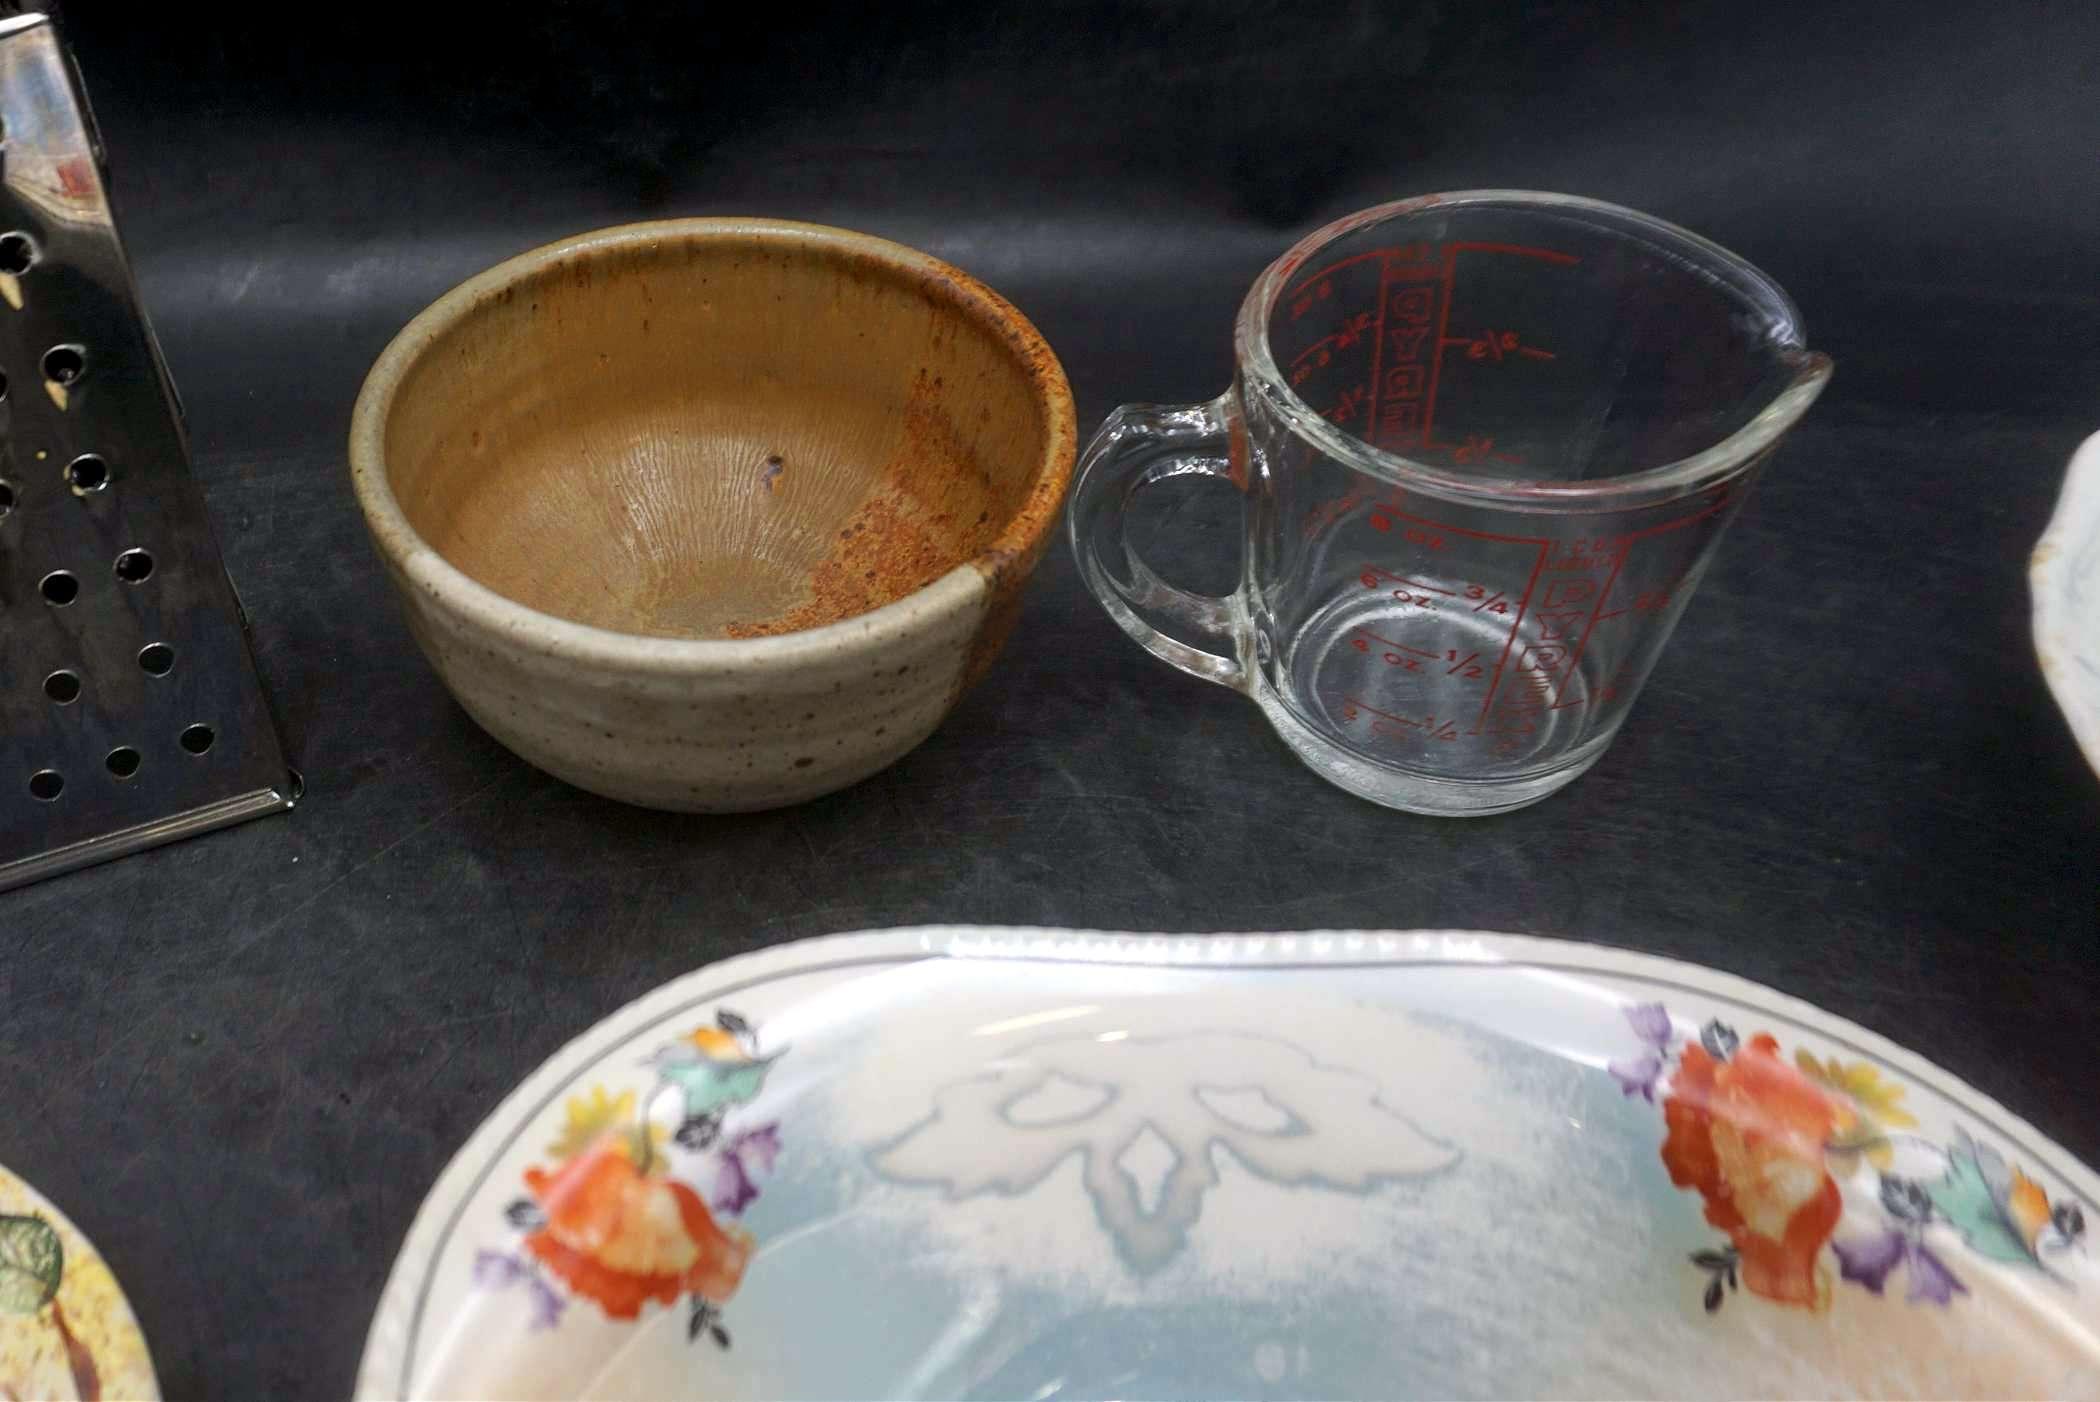 Grater, Glass Juicer, Decorative Bowls, Plates, Measuring Cup & Bowl